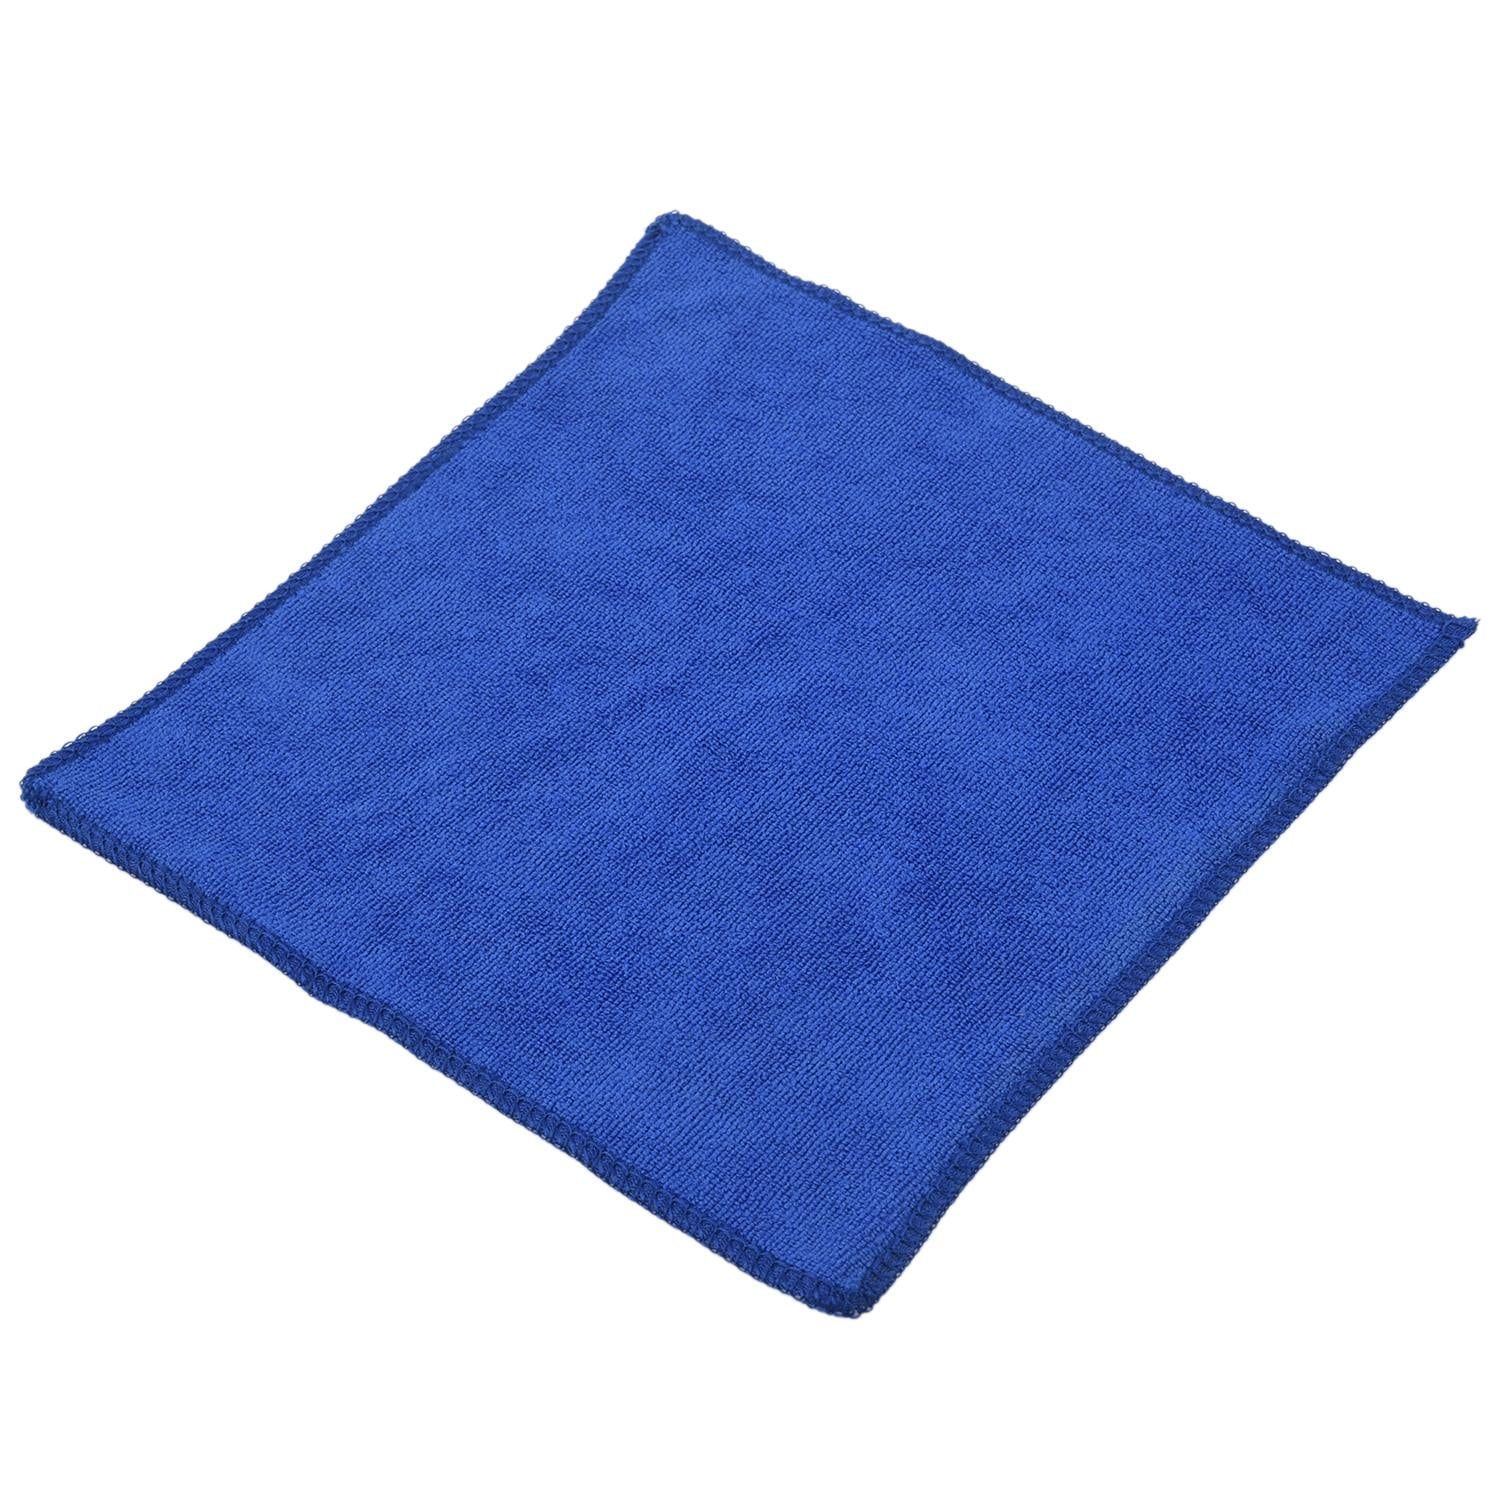 10PCS Microfiber Cleaning Cloths Washing Towel Blue for Car Polishing Wax Detail 